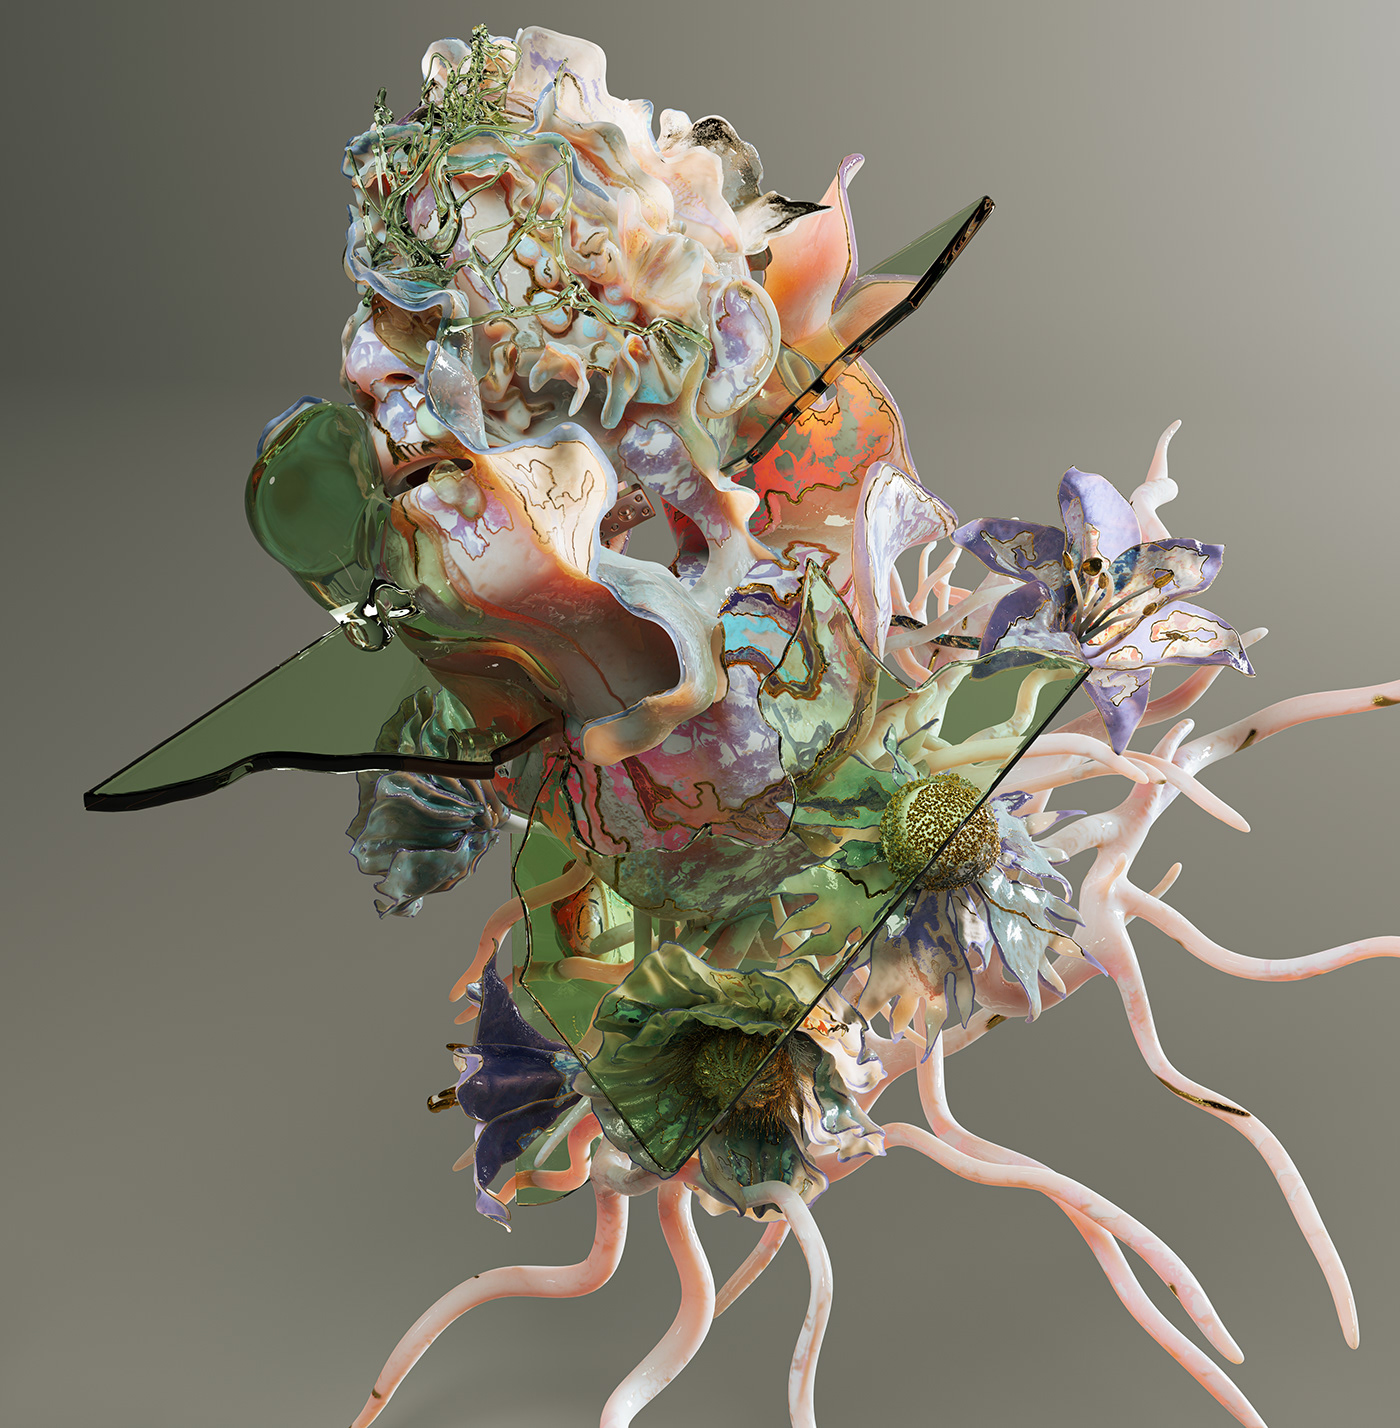 Digital Art  contemporary 3D Nature CGI organic abstract environment Sustainability